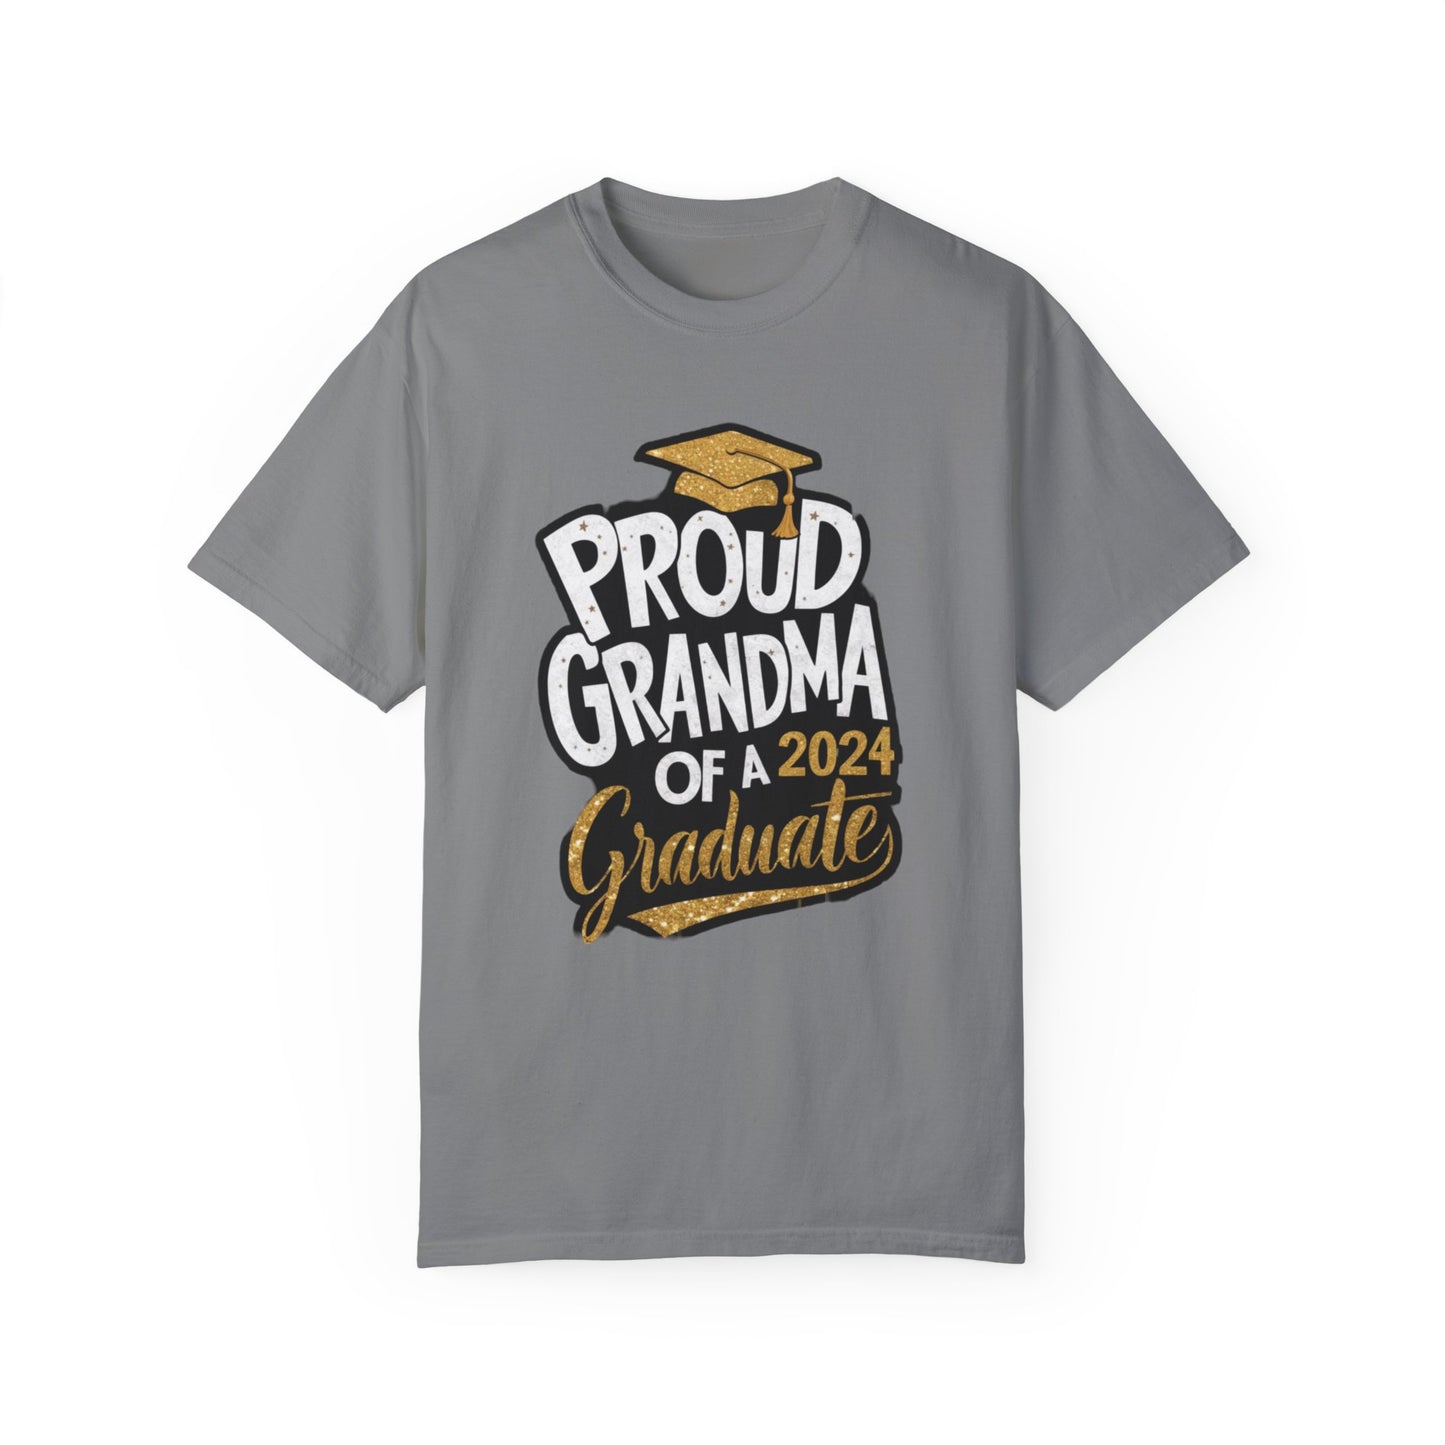 Proud of Grandma 2024 Graduate Unisex Garment-dyed T-shirt Cotton Funny Humorous Graphic Soft Premium Unisex Men Women Grey T-shirt Birthday Gift-9